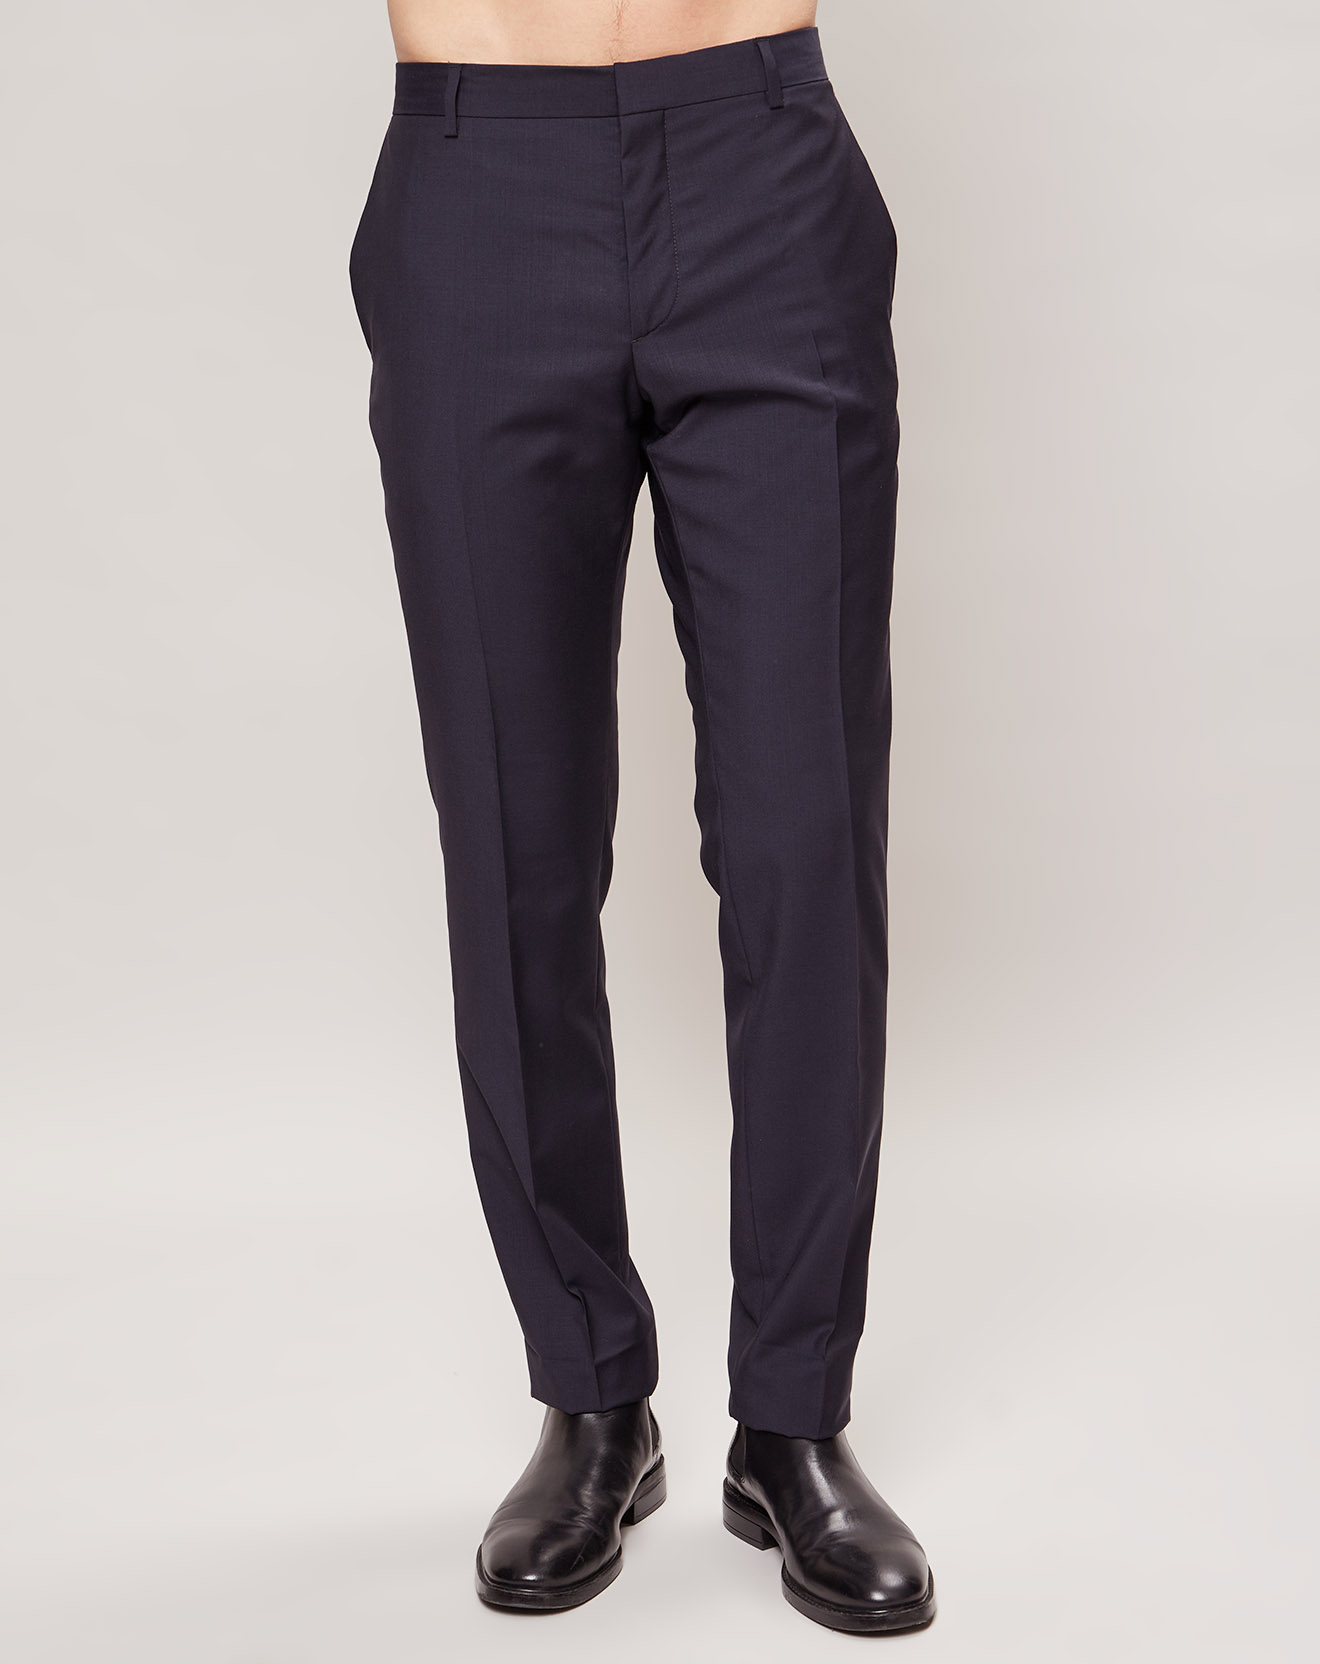 Pantalon 100% Laine fitted Paris-Bm bleu marine